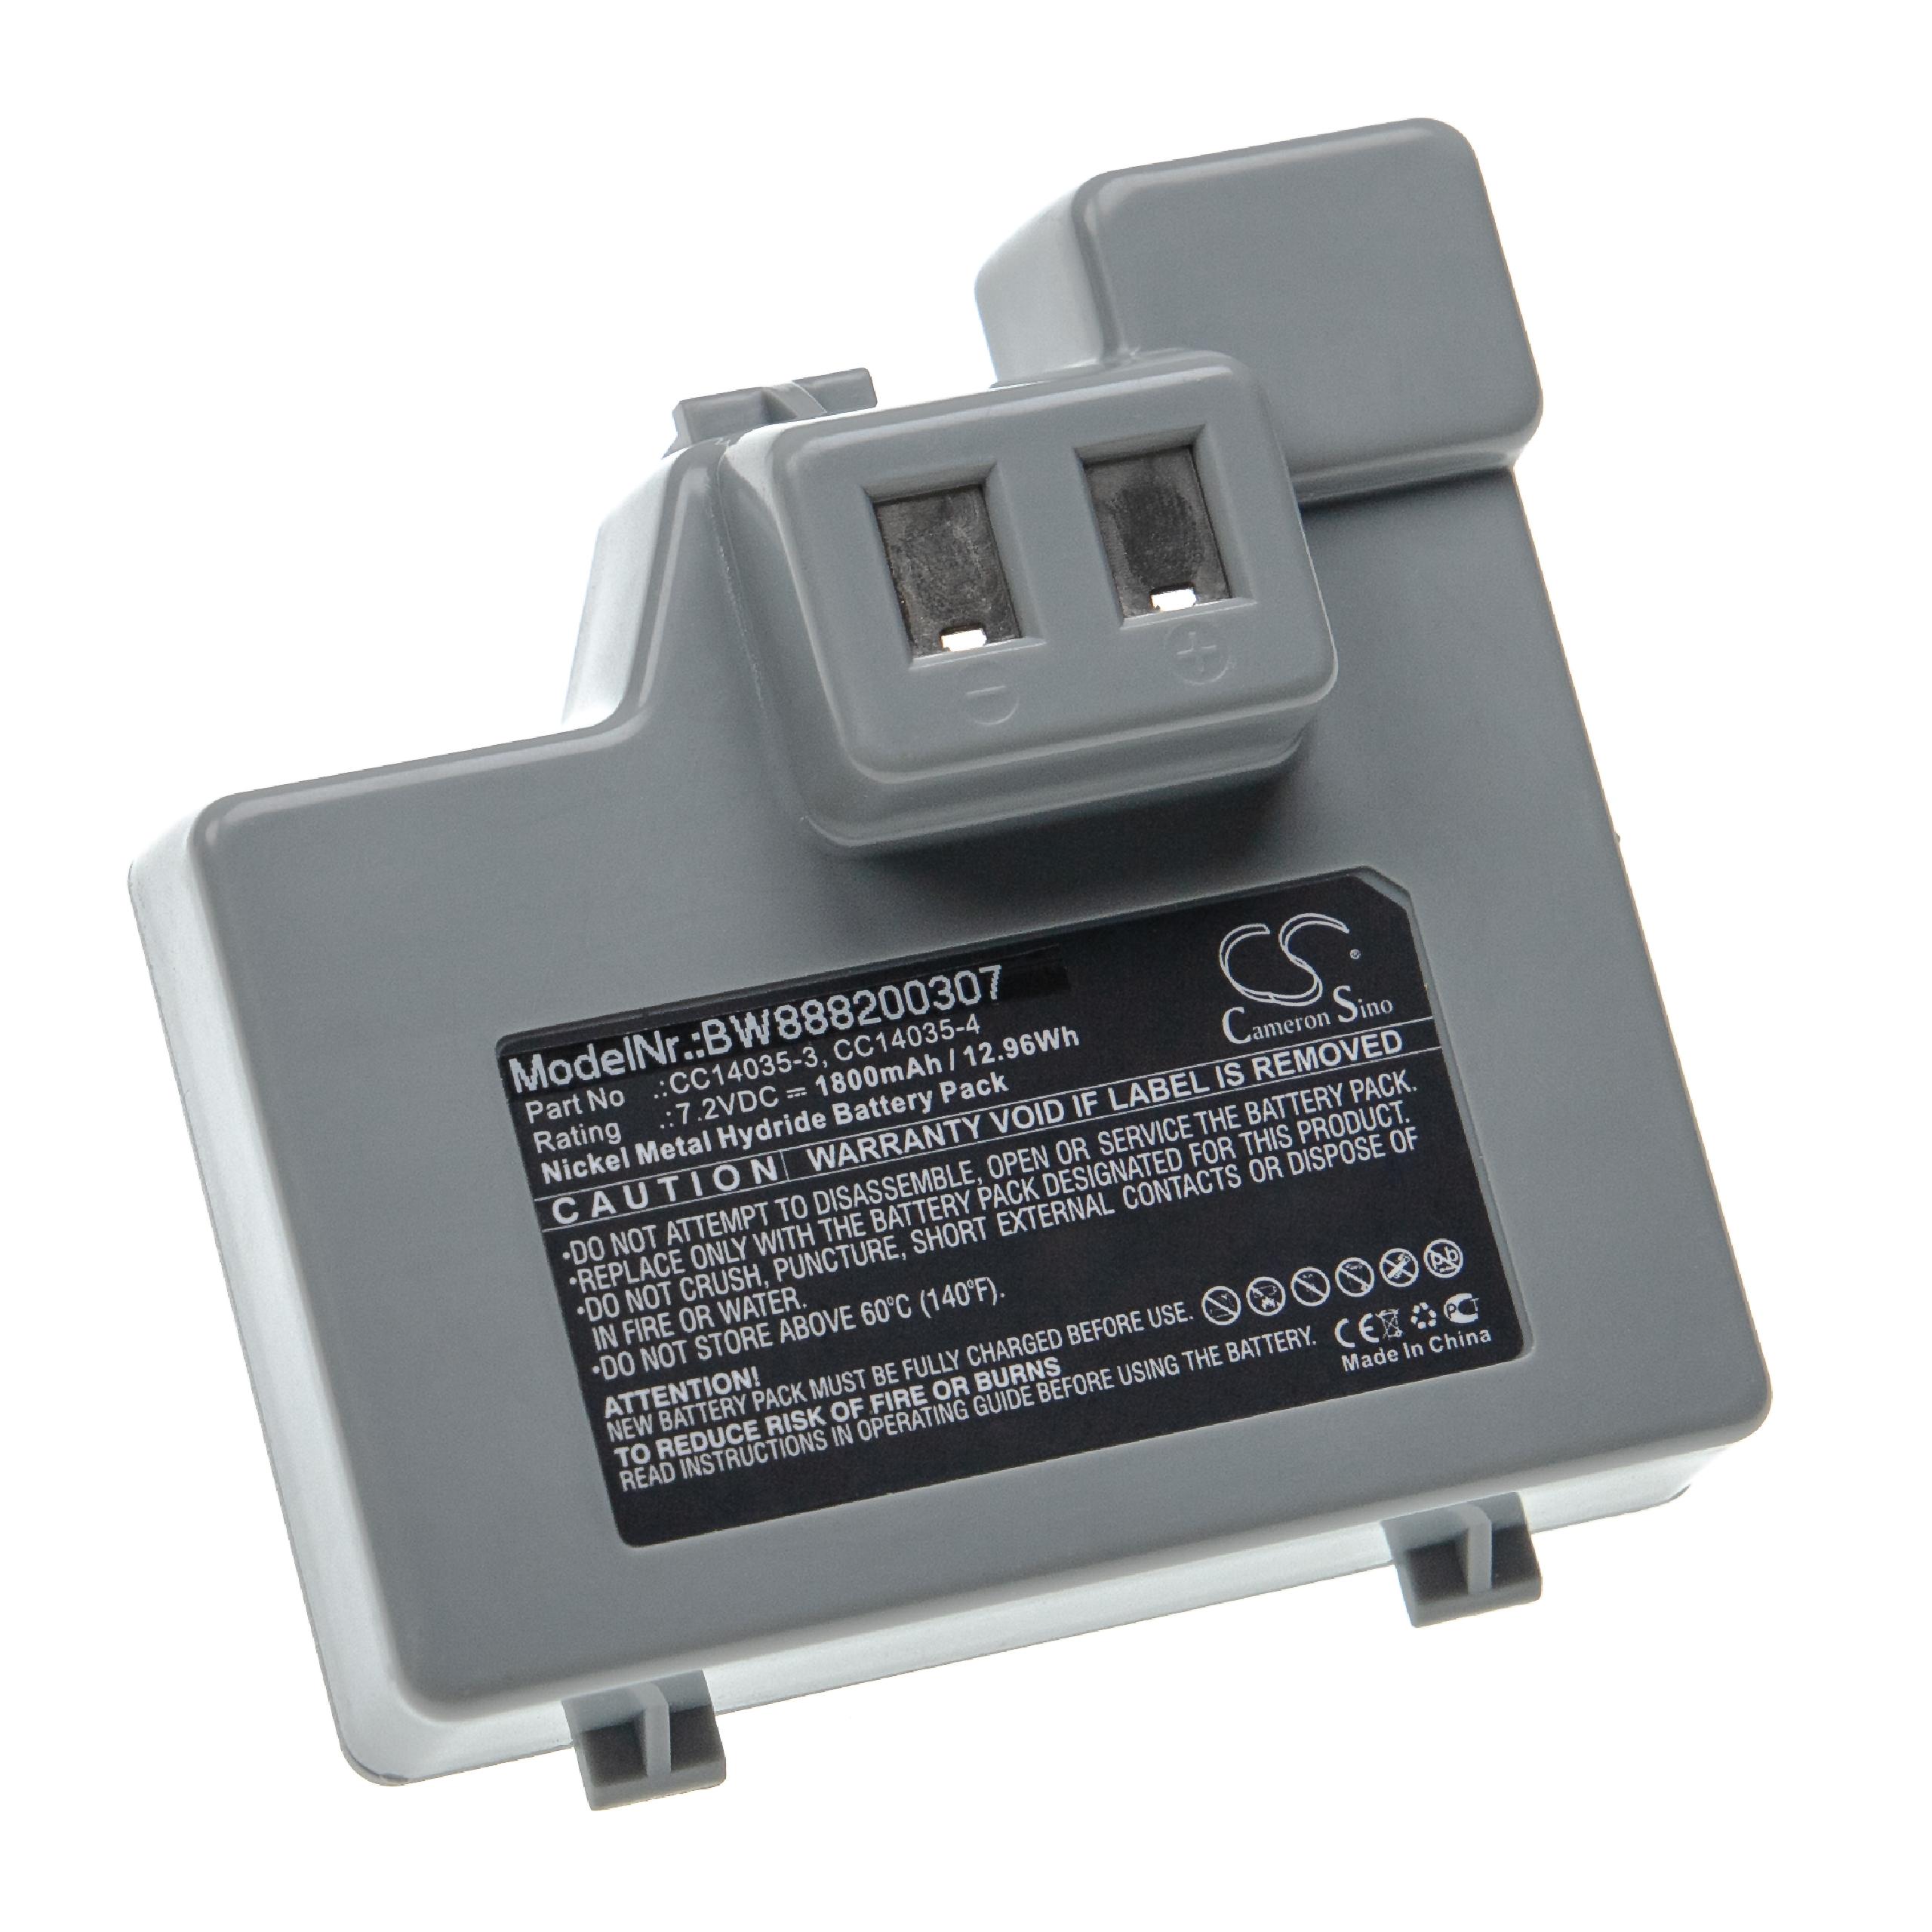 Printer Battery Replacement for Zebra CC14035-4, CC14035-3 - 1800mAh 7.2V NiMH